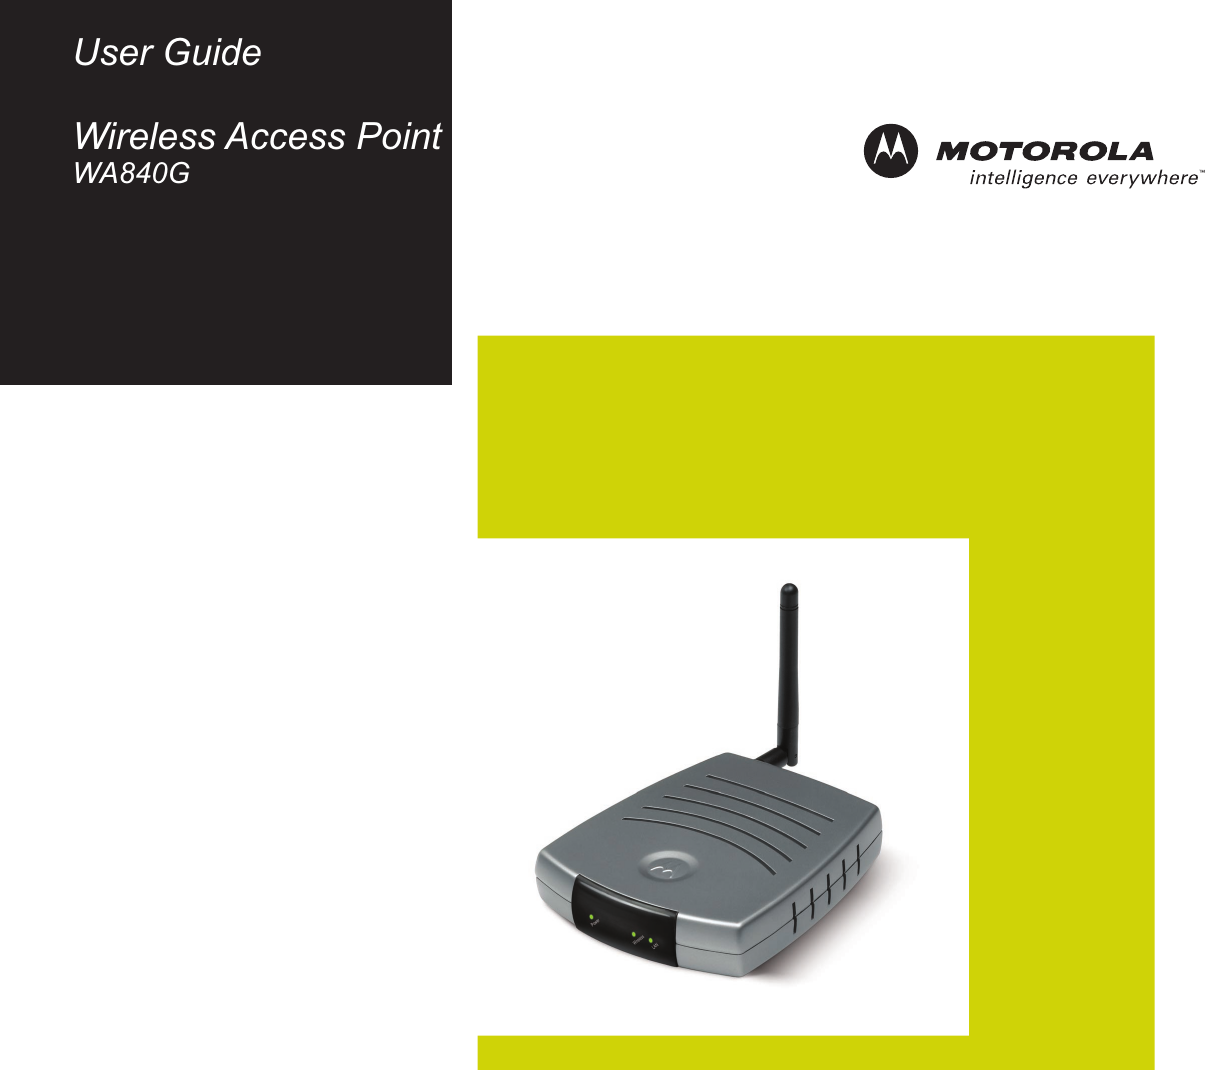 User GuideWireless Access PointWA840G